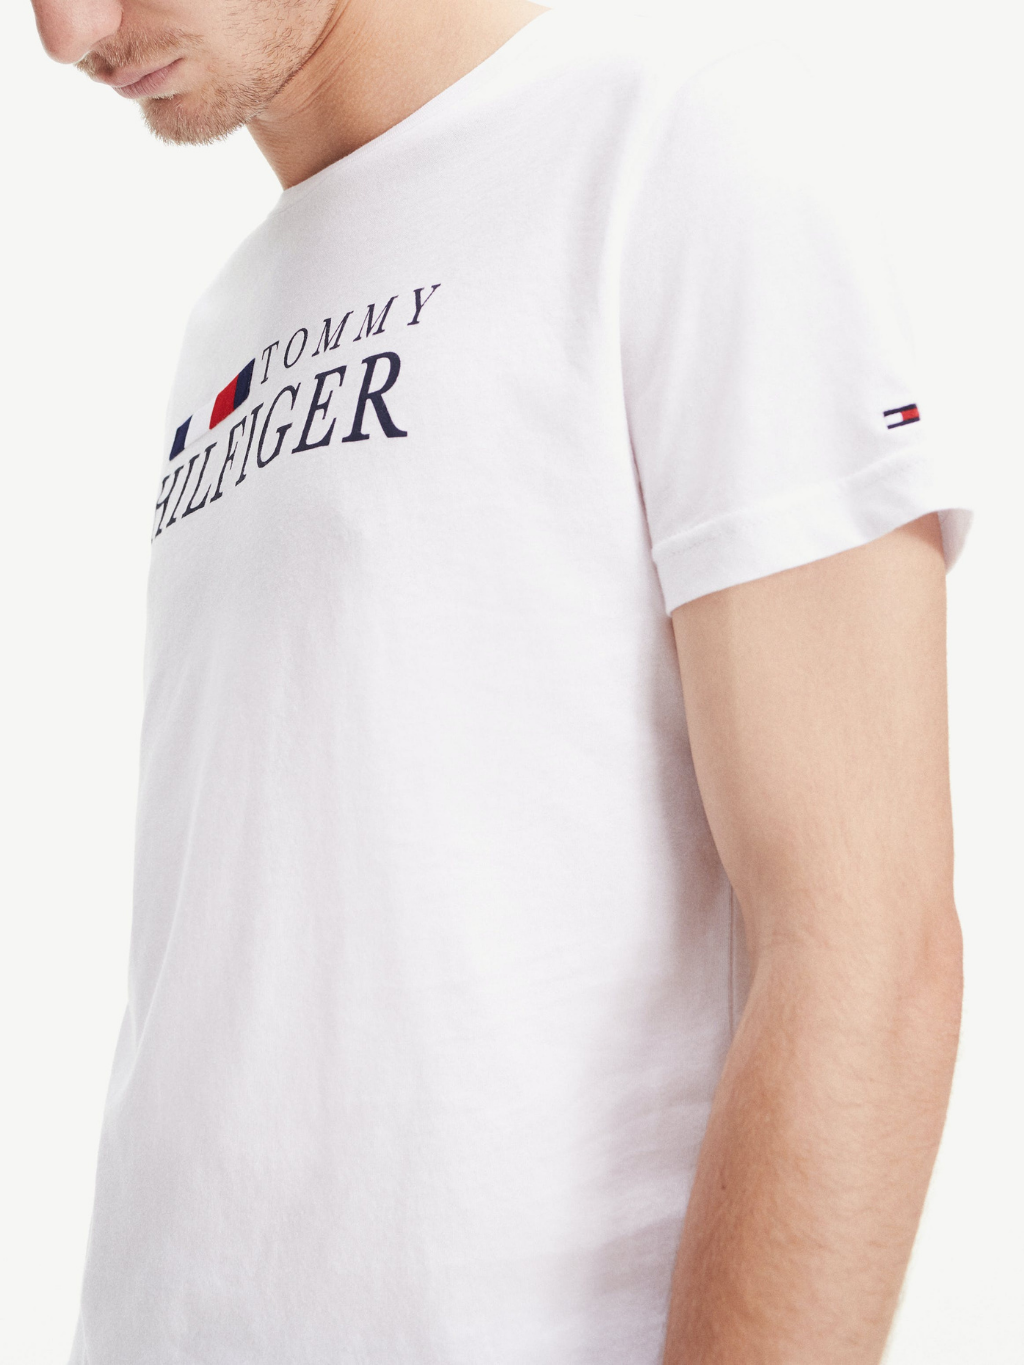 RWB Tommy Hilfiger T-Shirt